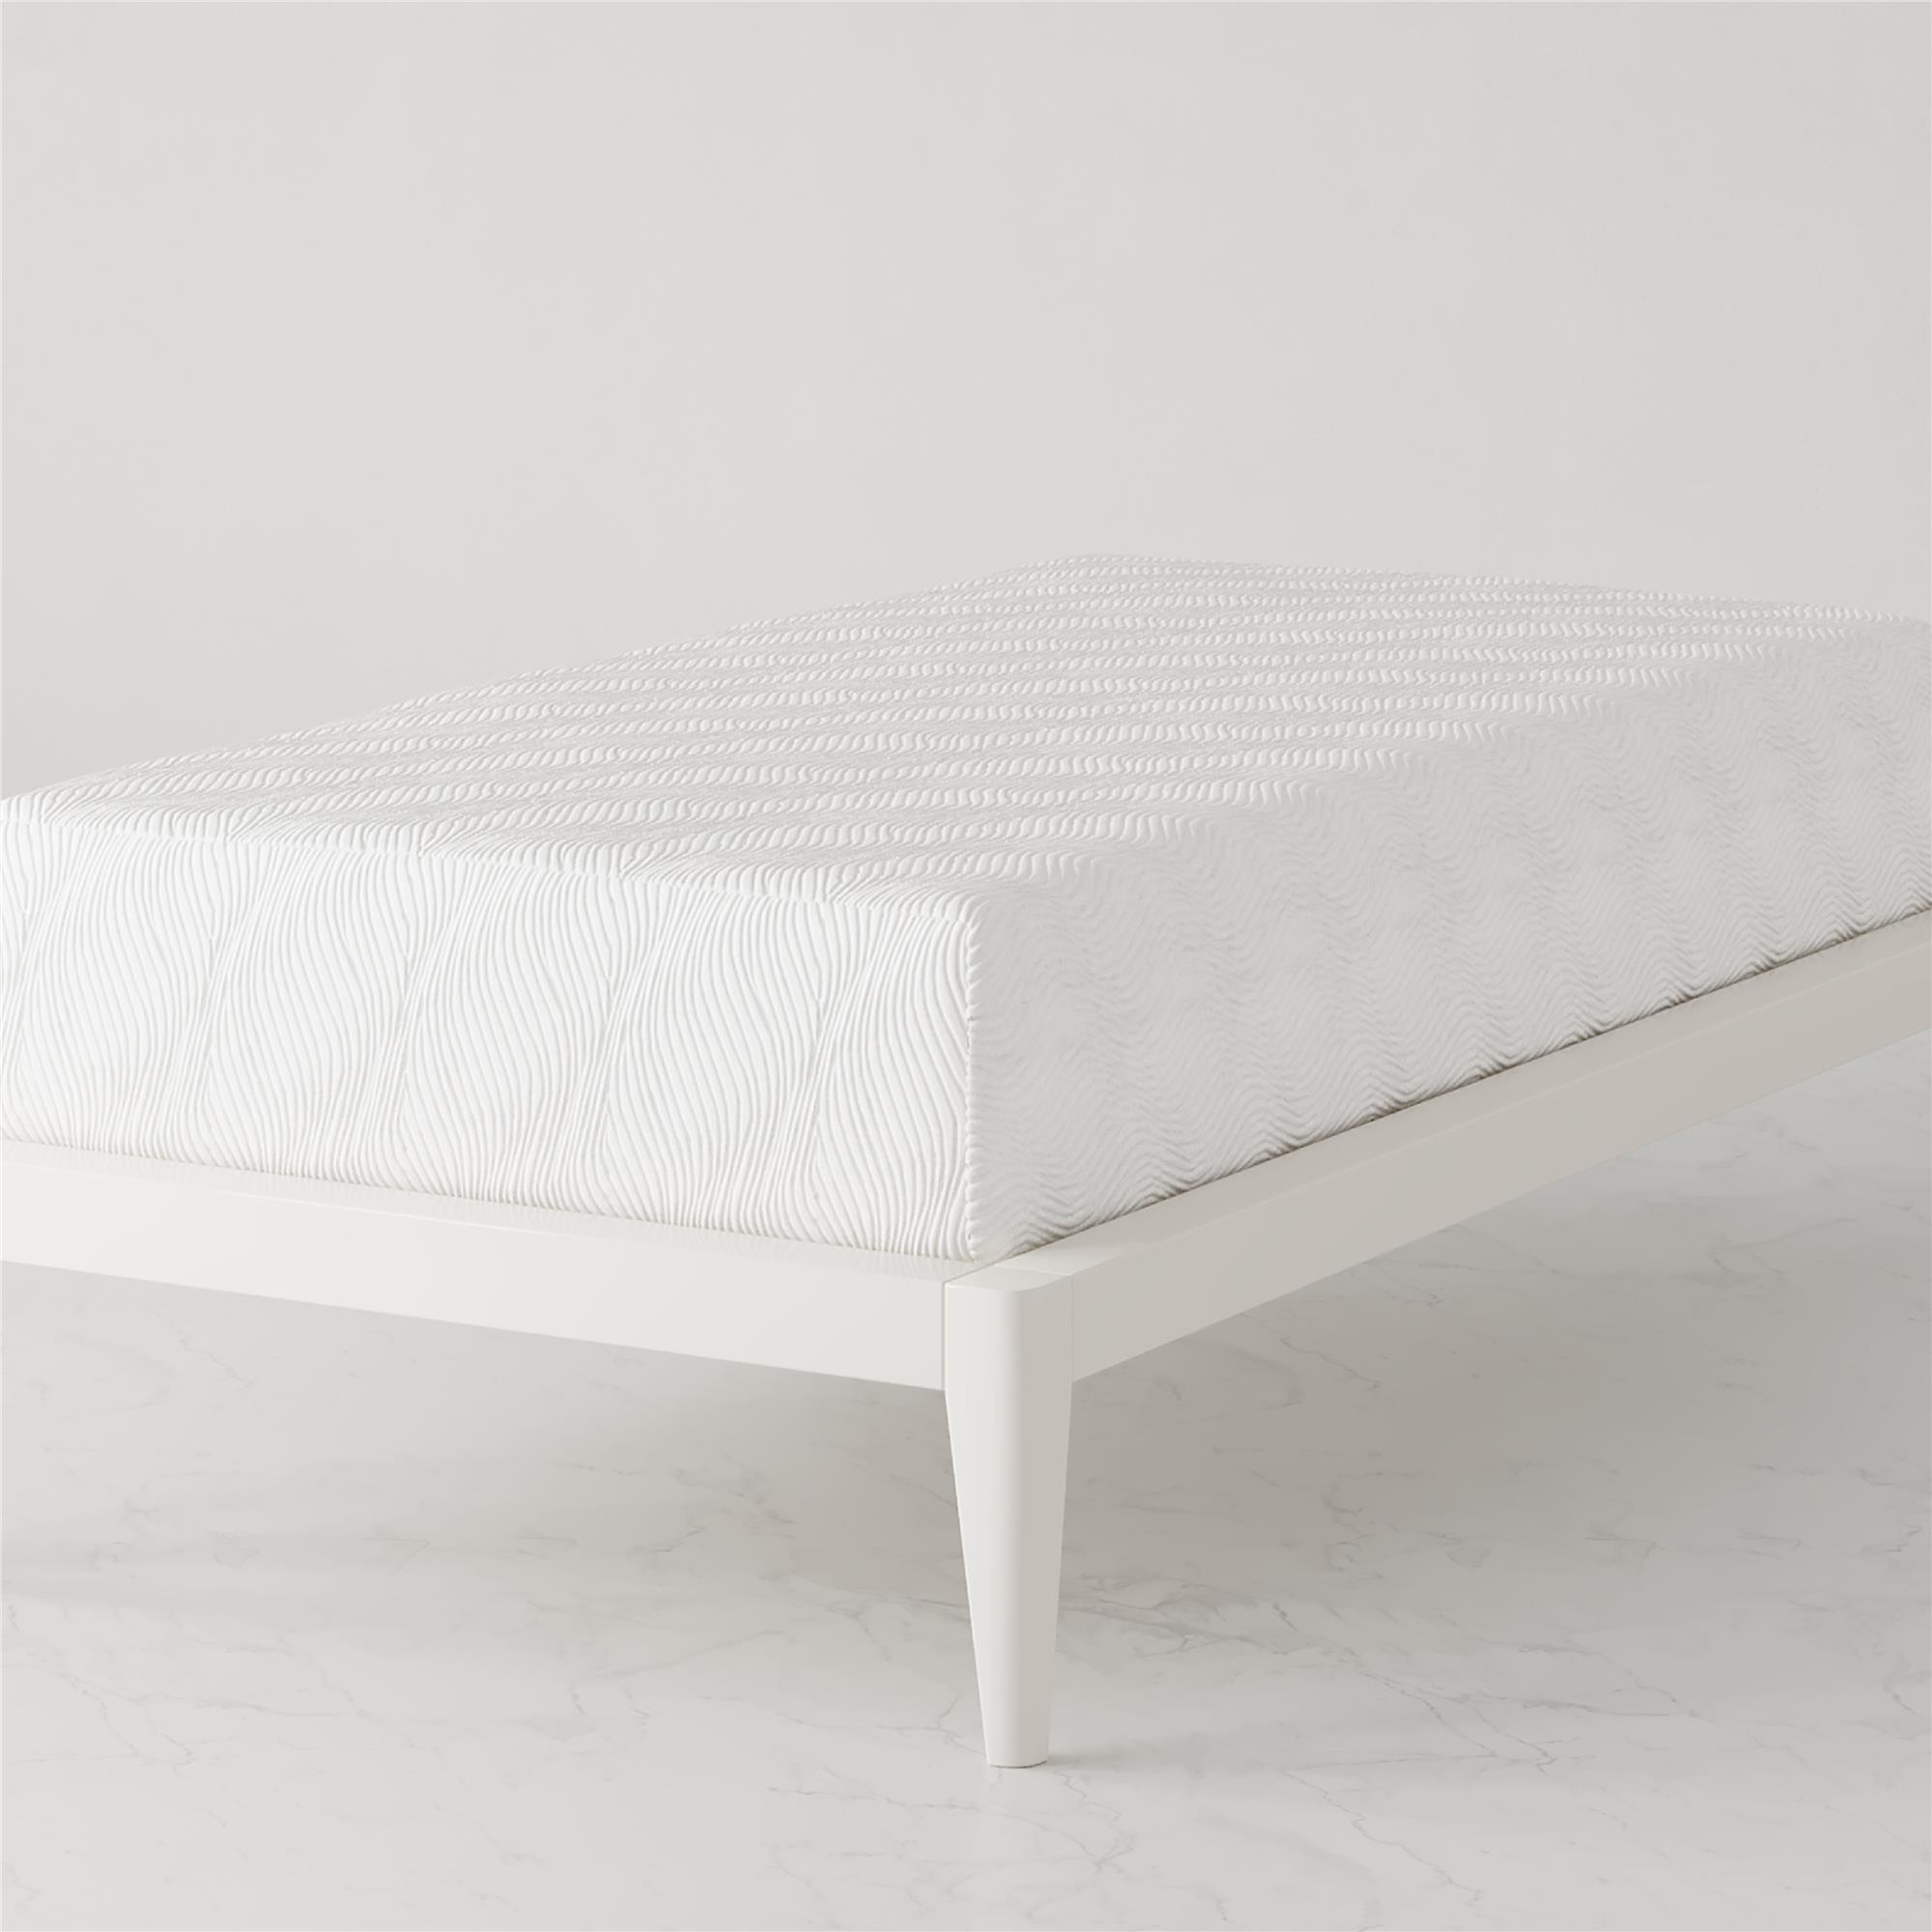 Signature Sleep Memoir 12" High-Density, Responsive Memory Foam Mattress, Bed-in-a-Box, Made in Italy, Twin - image 1 of 13